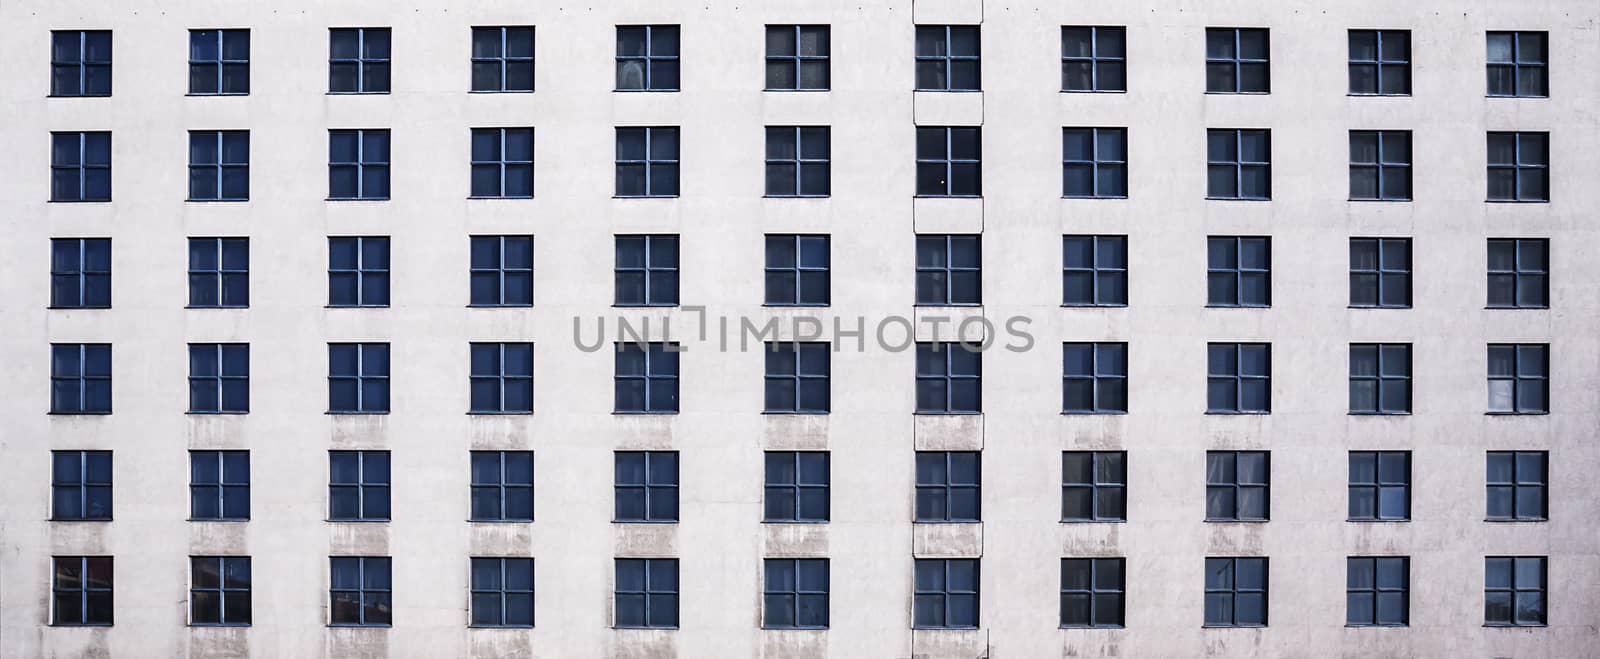 Urban backgound texture, square windows